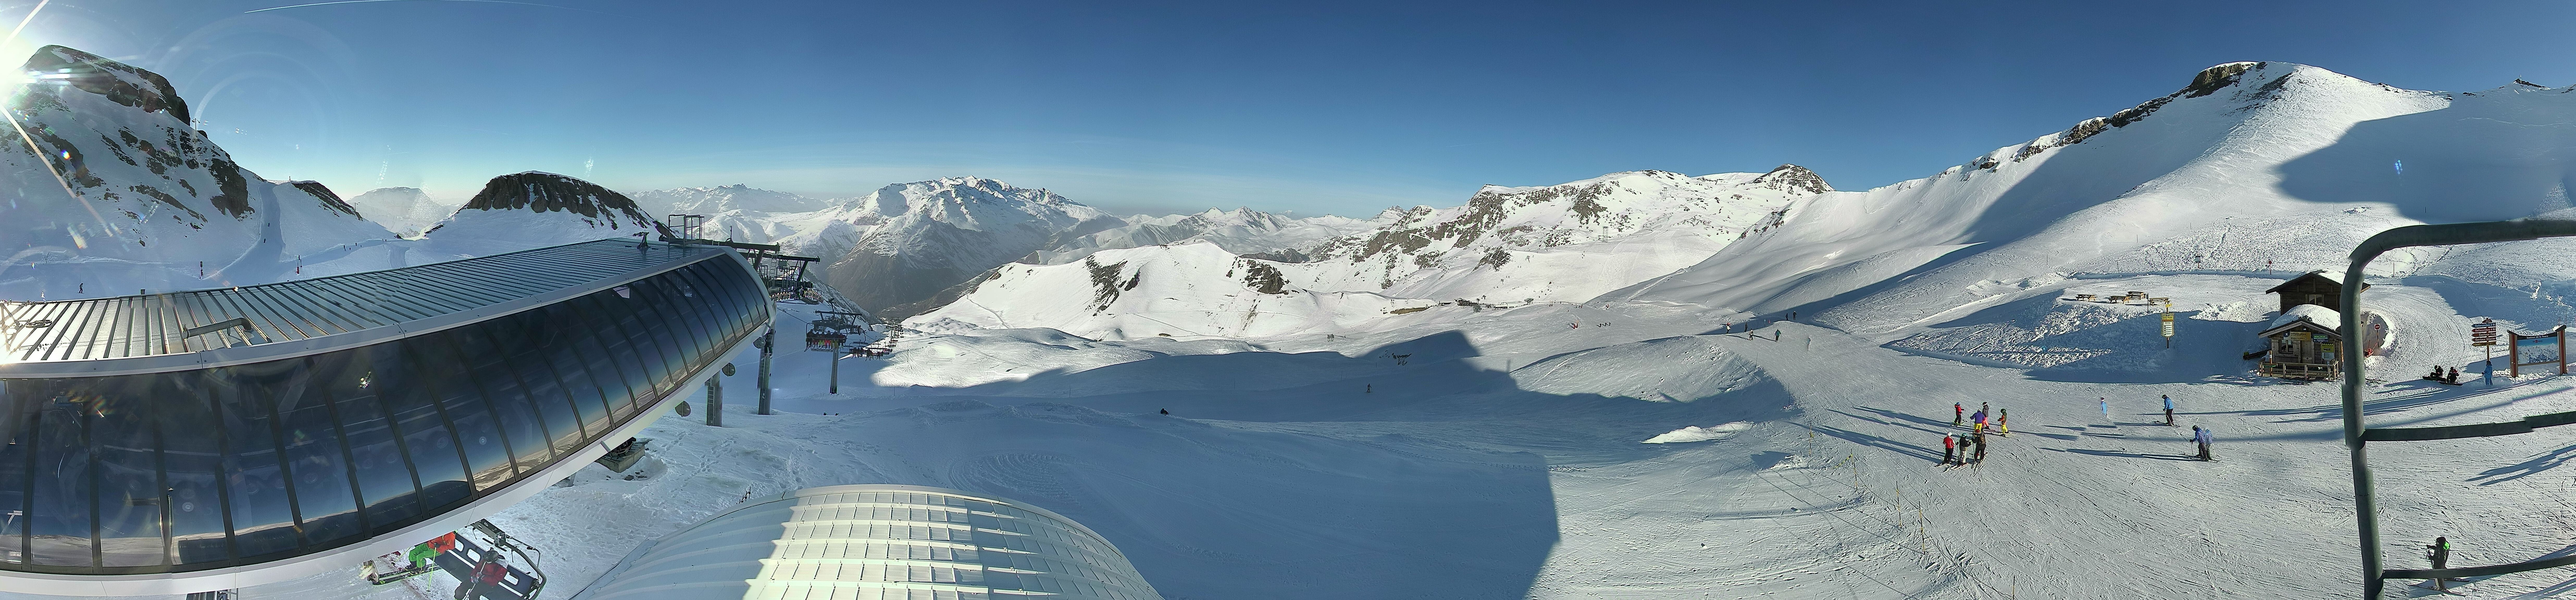 Deux Alpes Bellecombe webcam